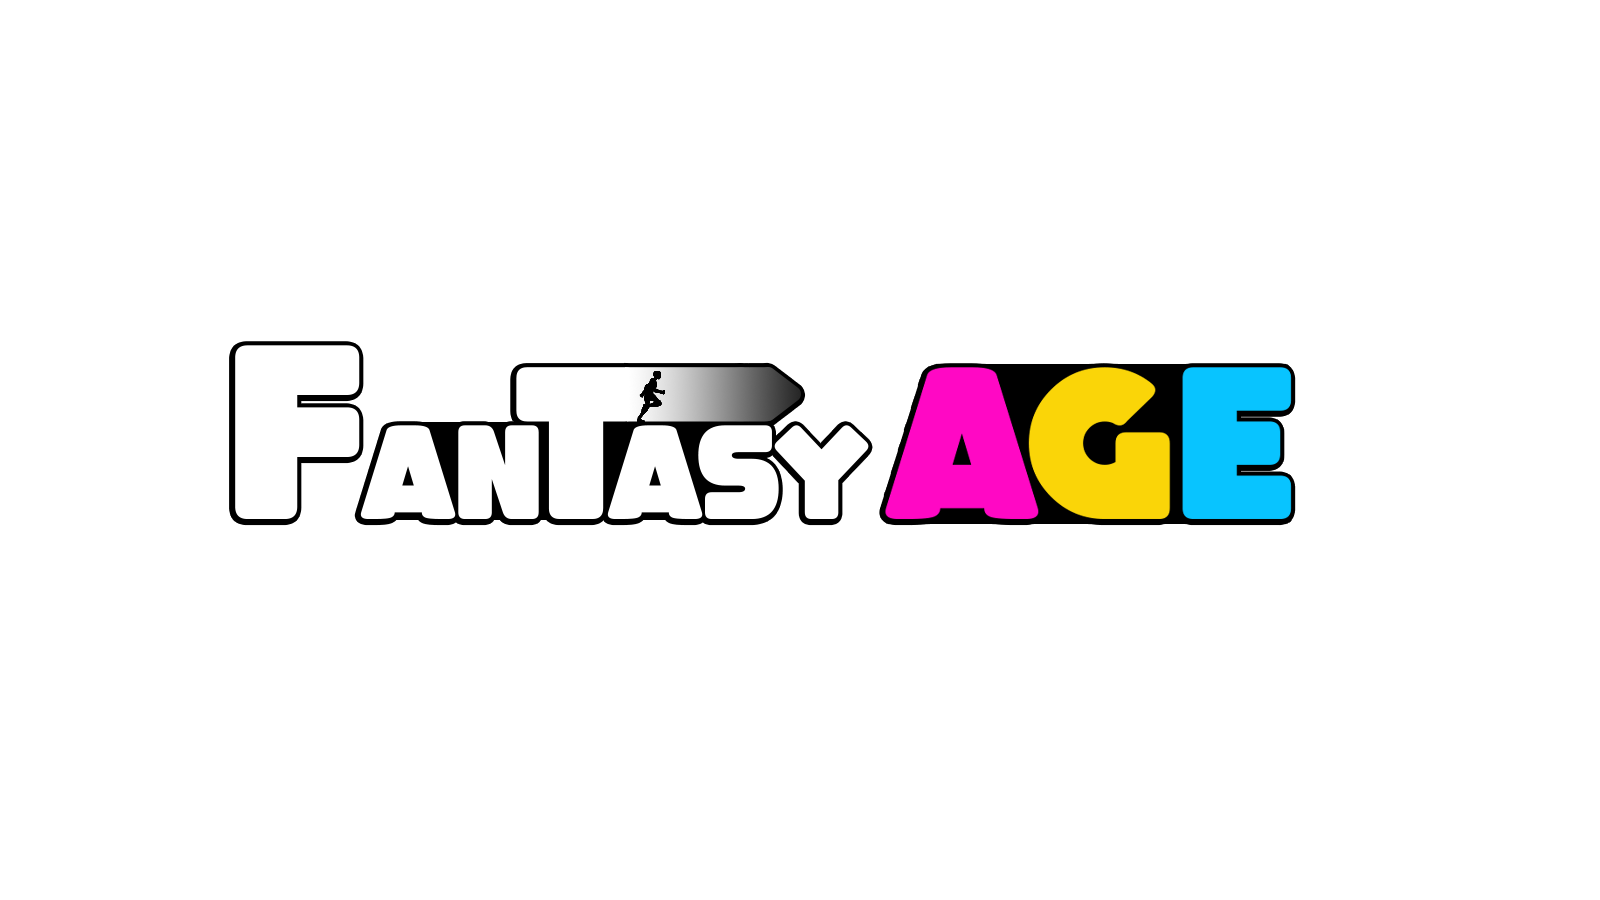 Fantasy Age